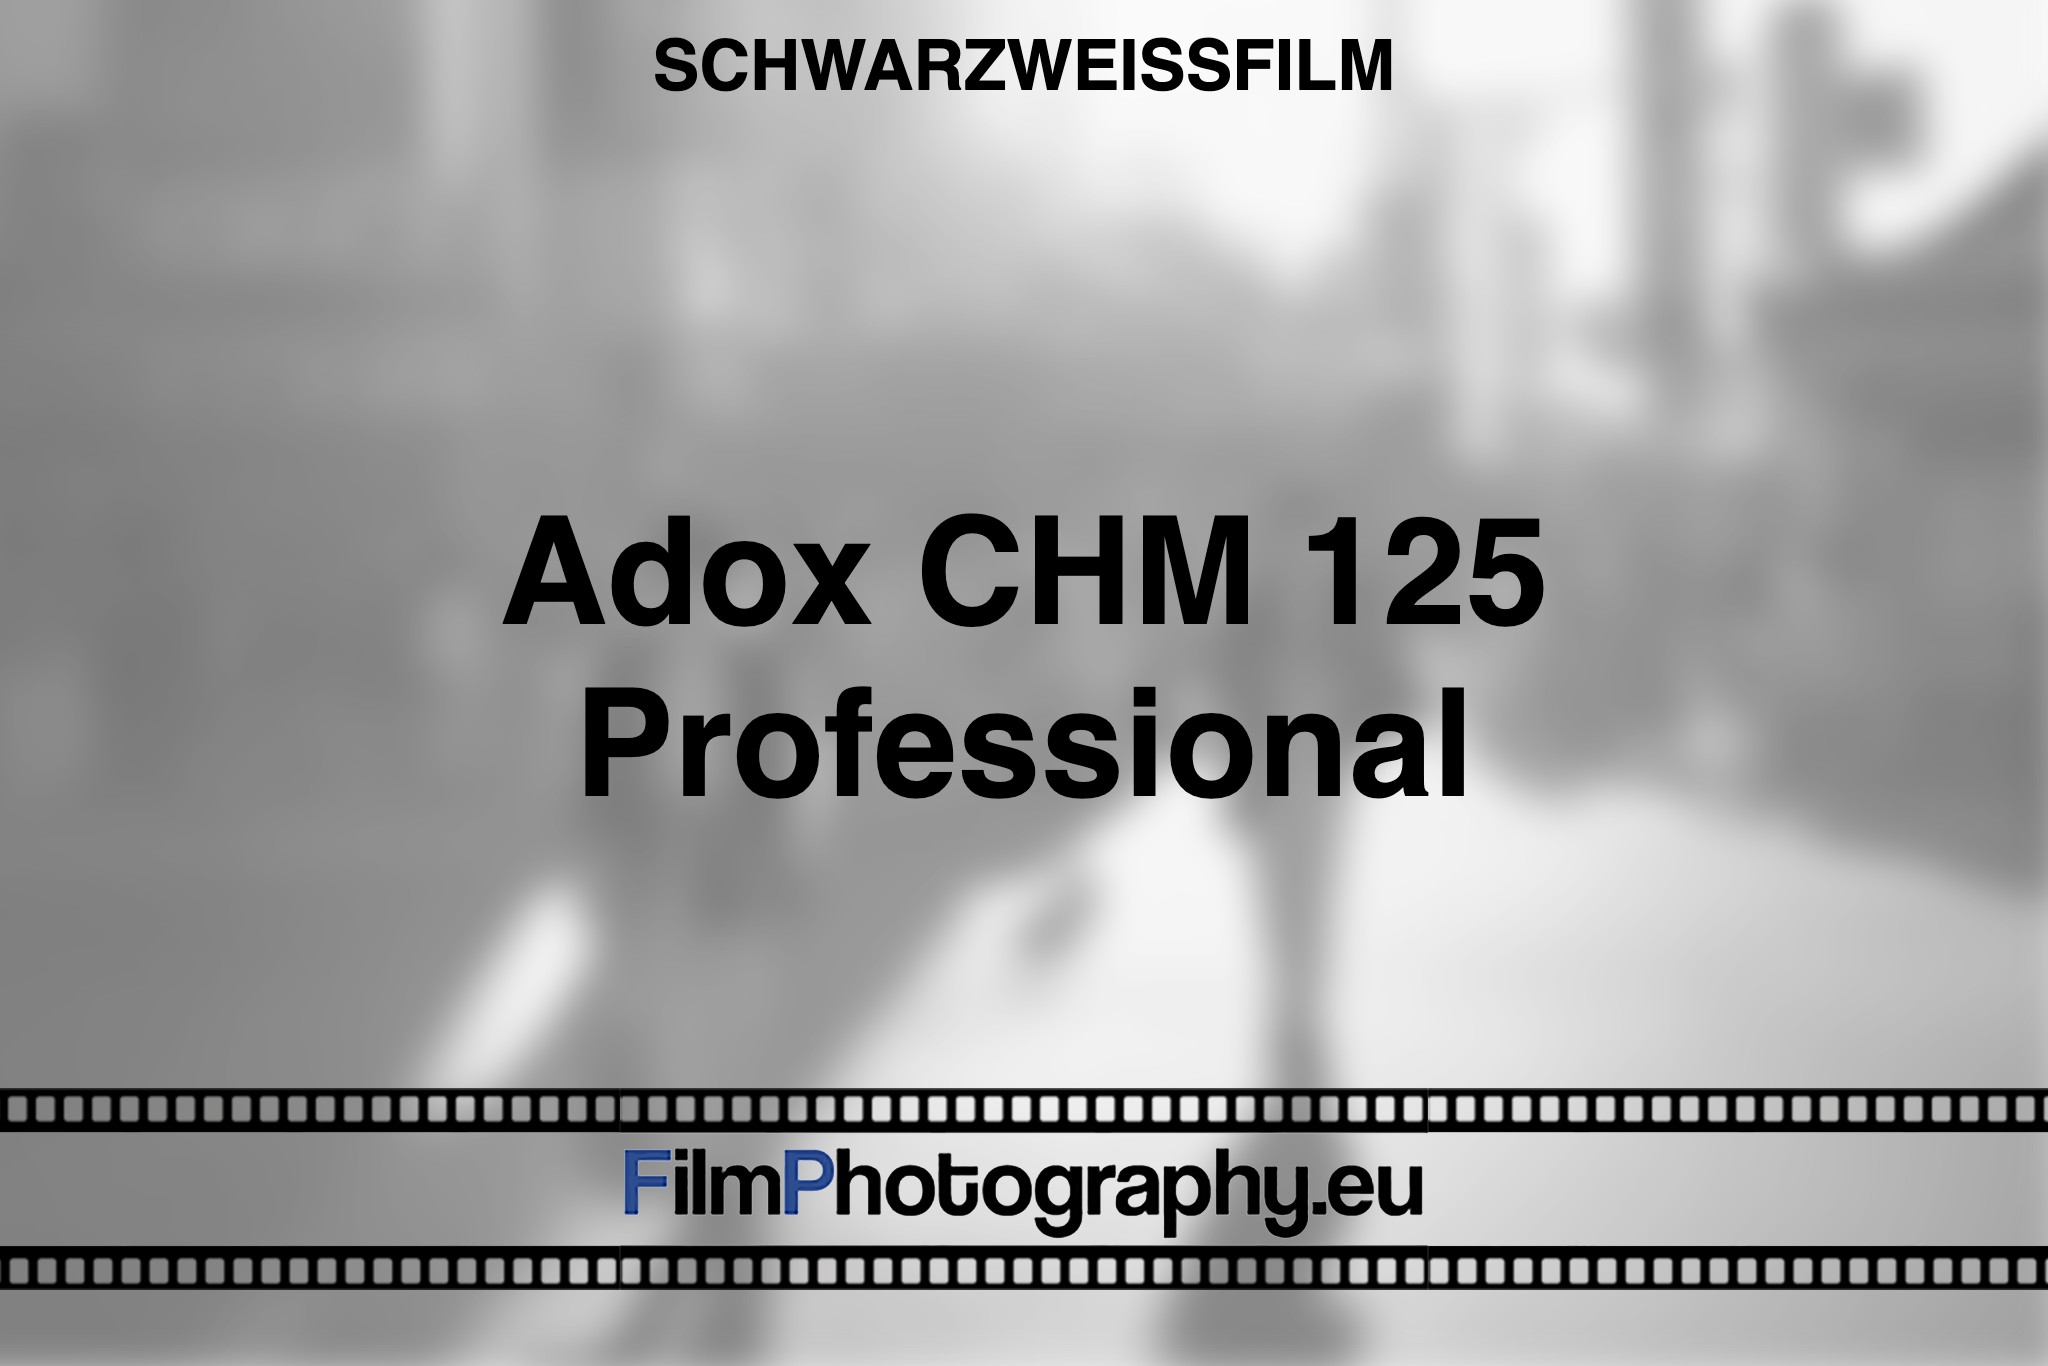 adox-chm-125-professional-schwarzweißfilm-bnv